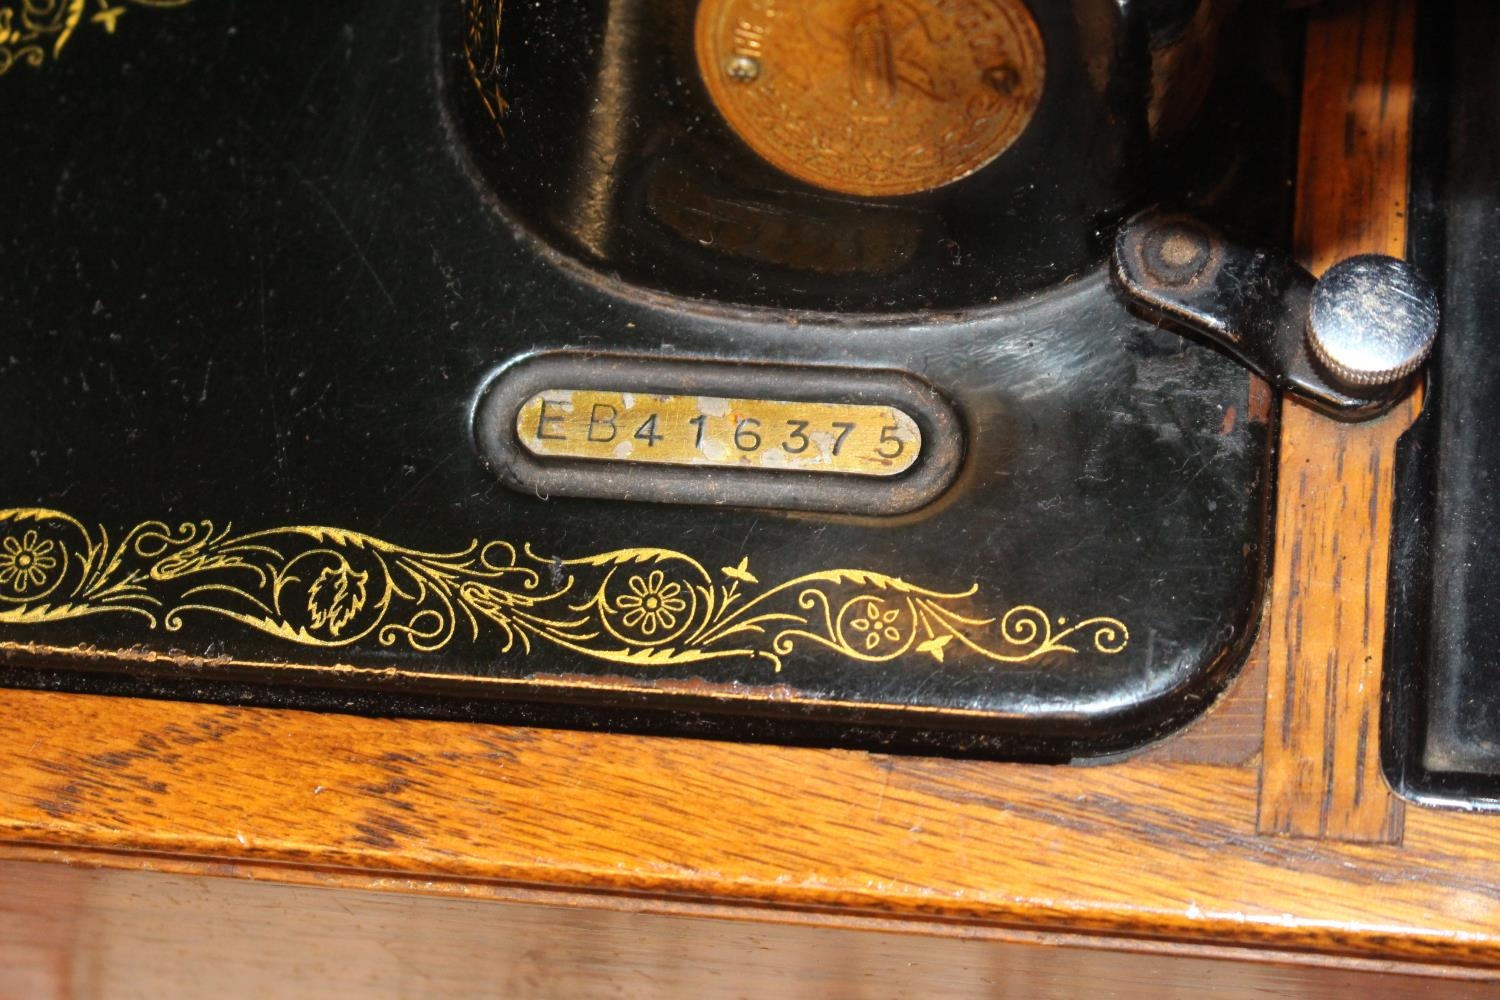 Cased Singer Sewing machine EB416375 - Image 2 of 2